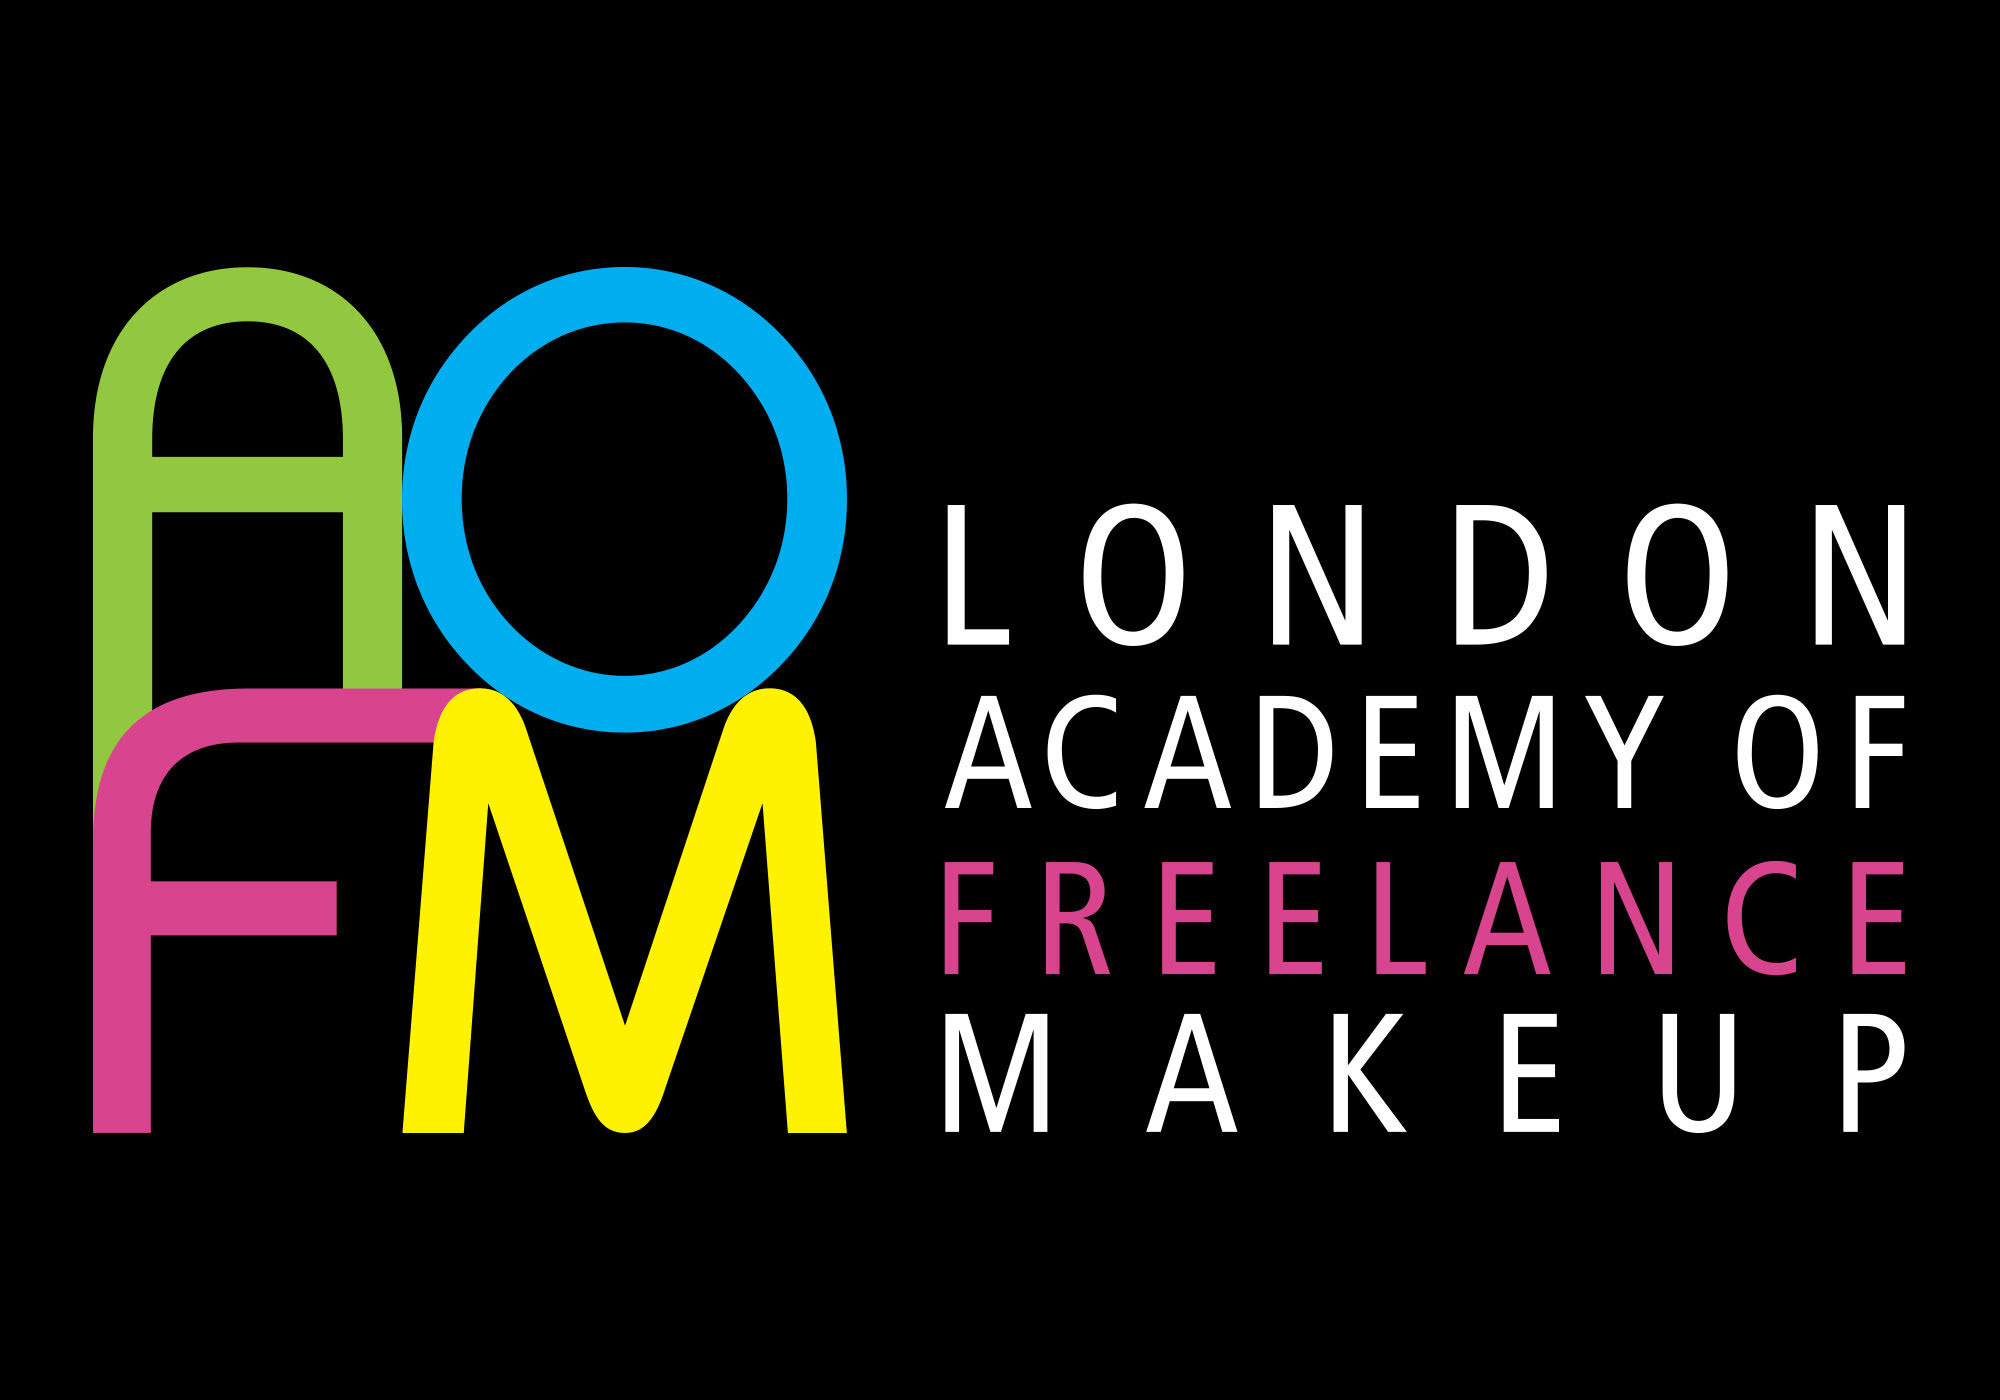 London Academy of Freelance Makeup